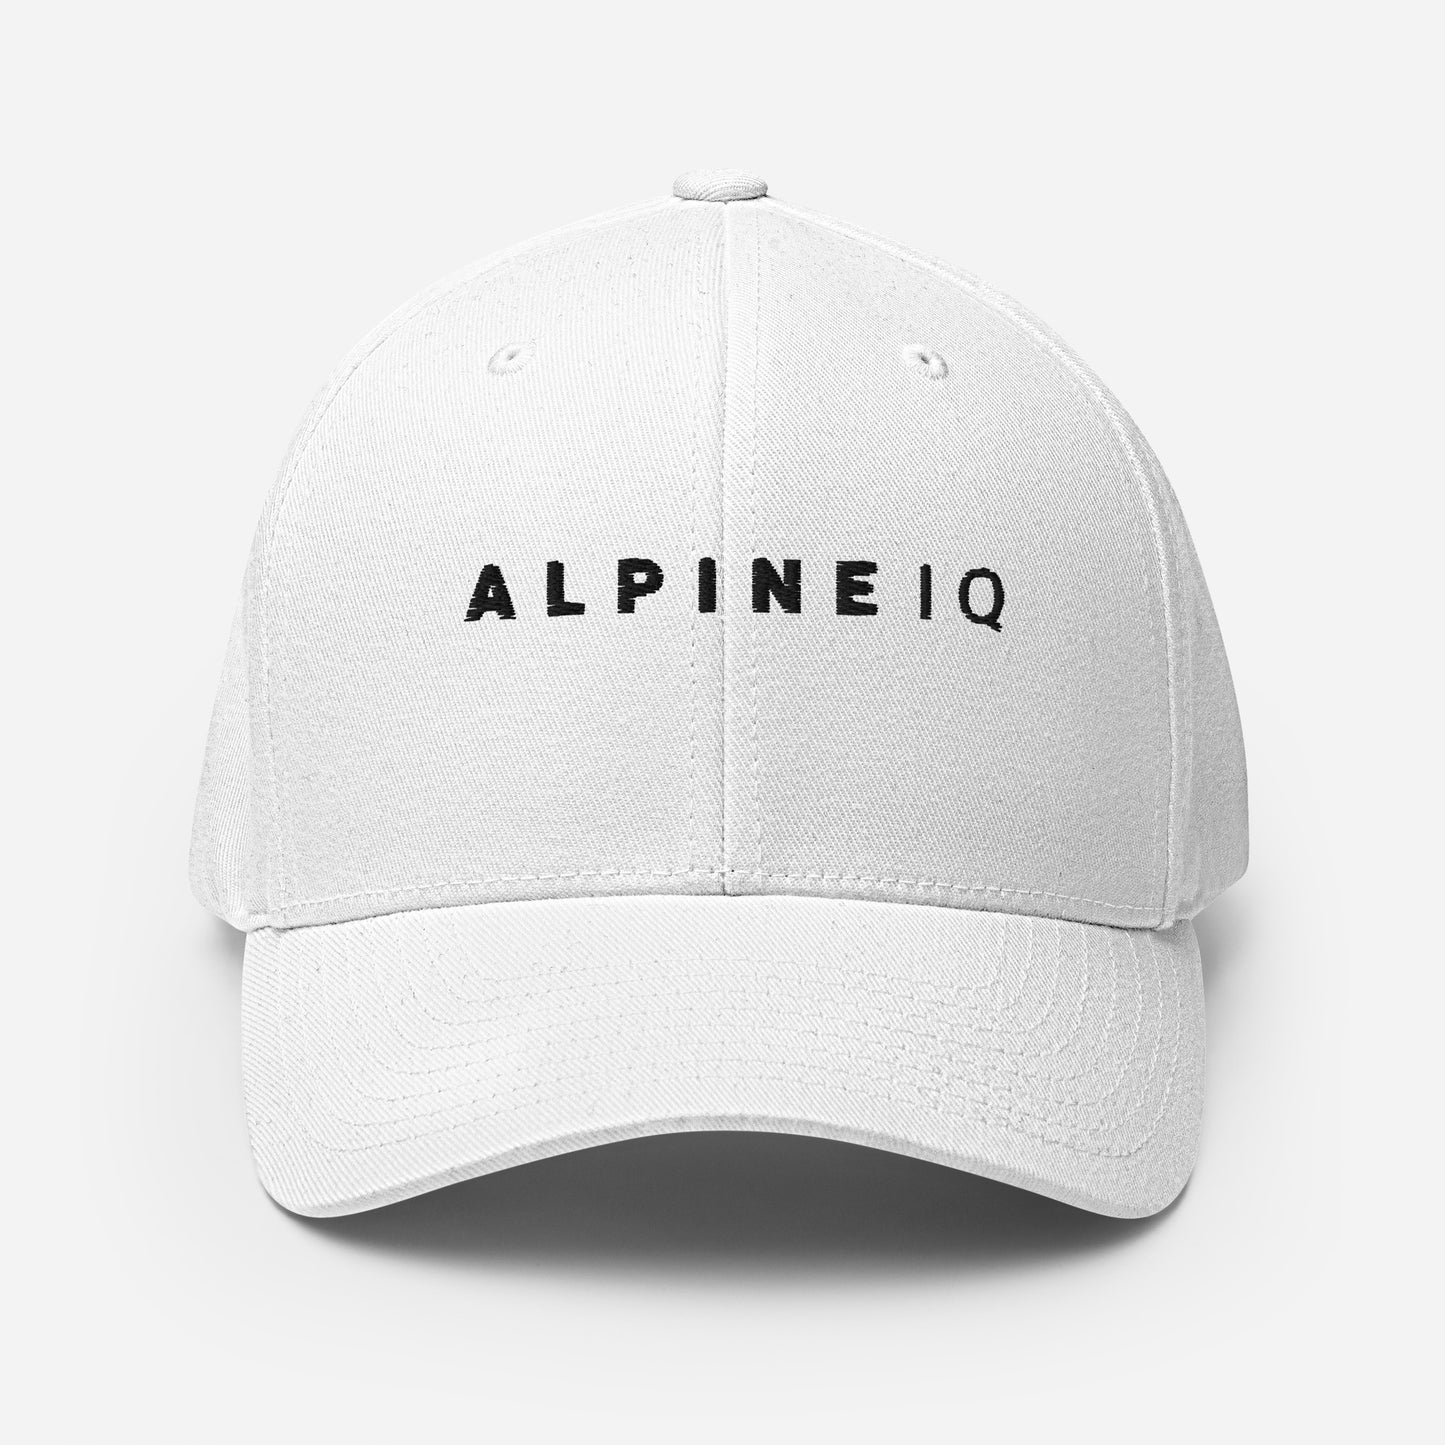 Alpine IQ Light Baseball Caps